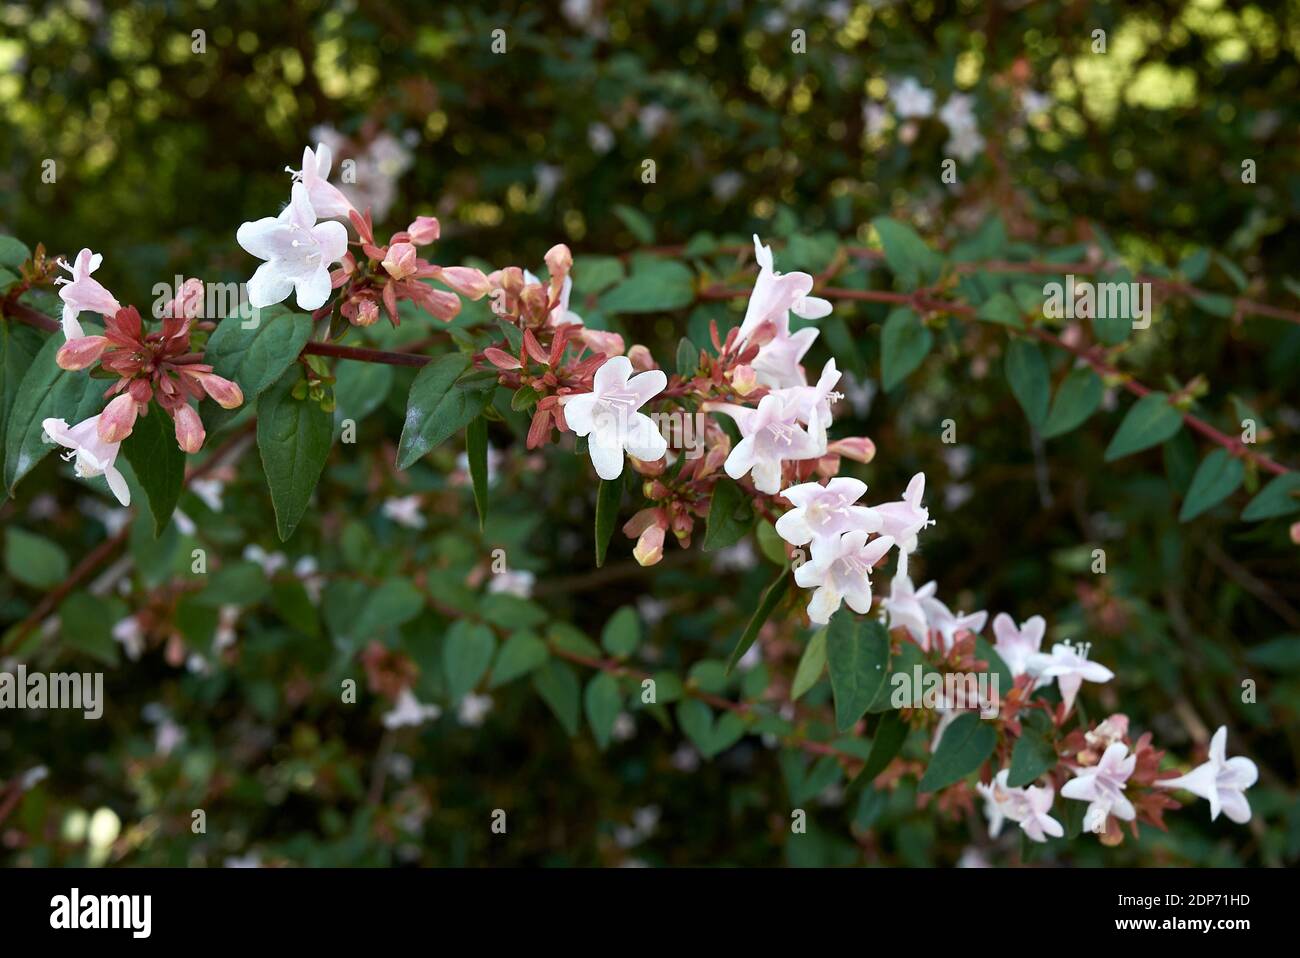 Abelia grandiflora shrub in bloom Stock Photo